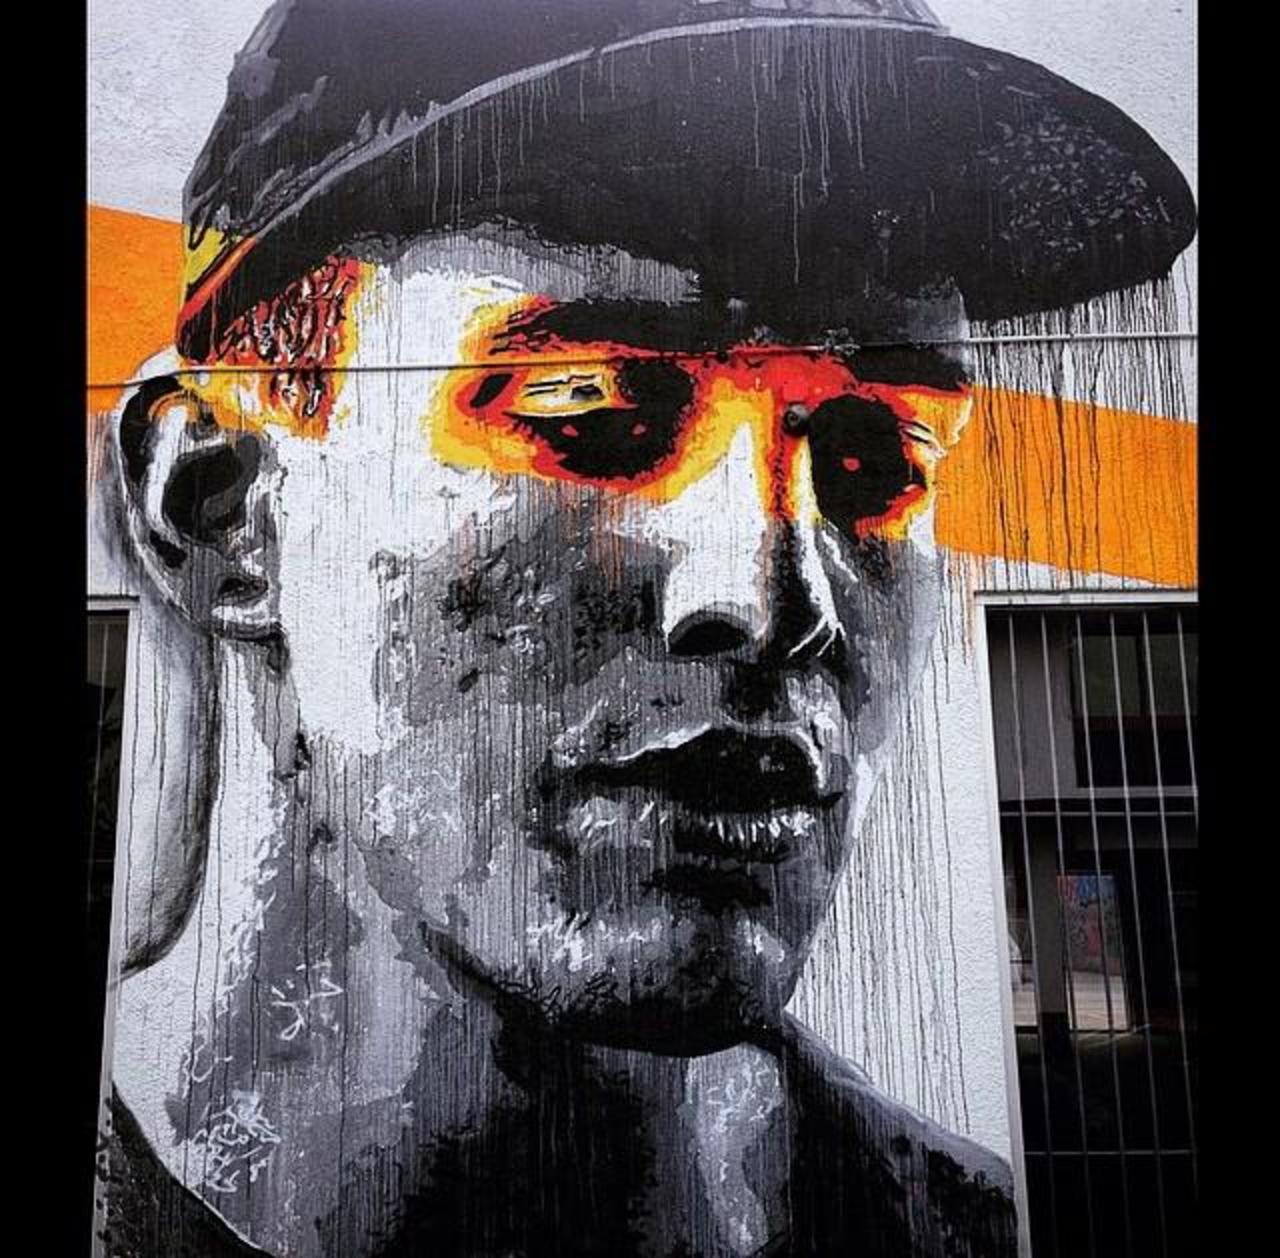 Artist Nils Westergard Street Art portrait in Miami 

#art #graffiti #mural #streetart http://t.co/ThLb9cDyzE